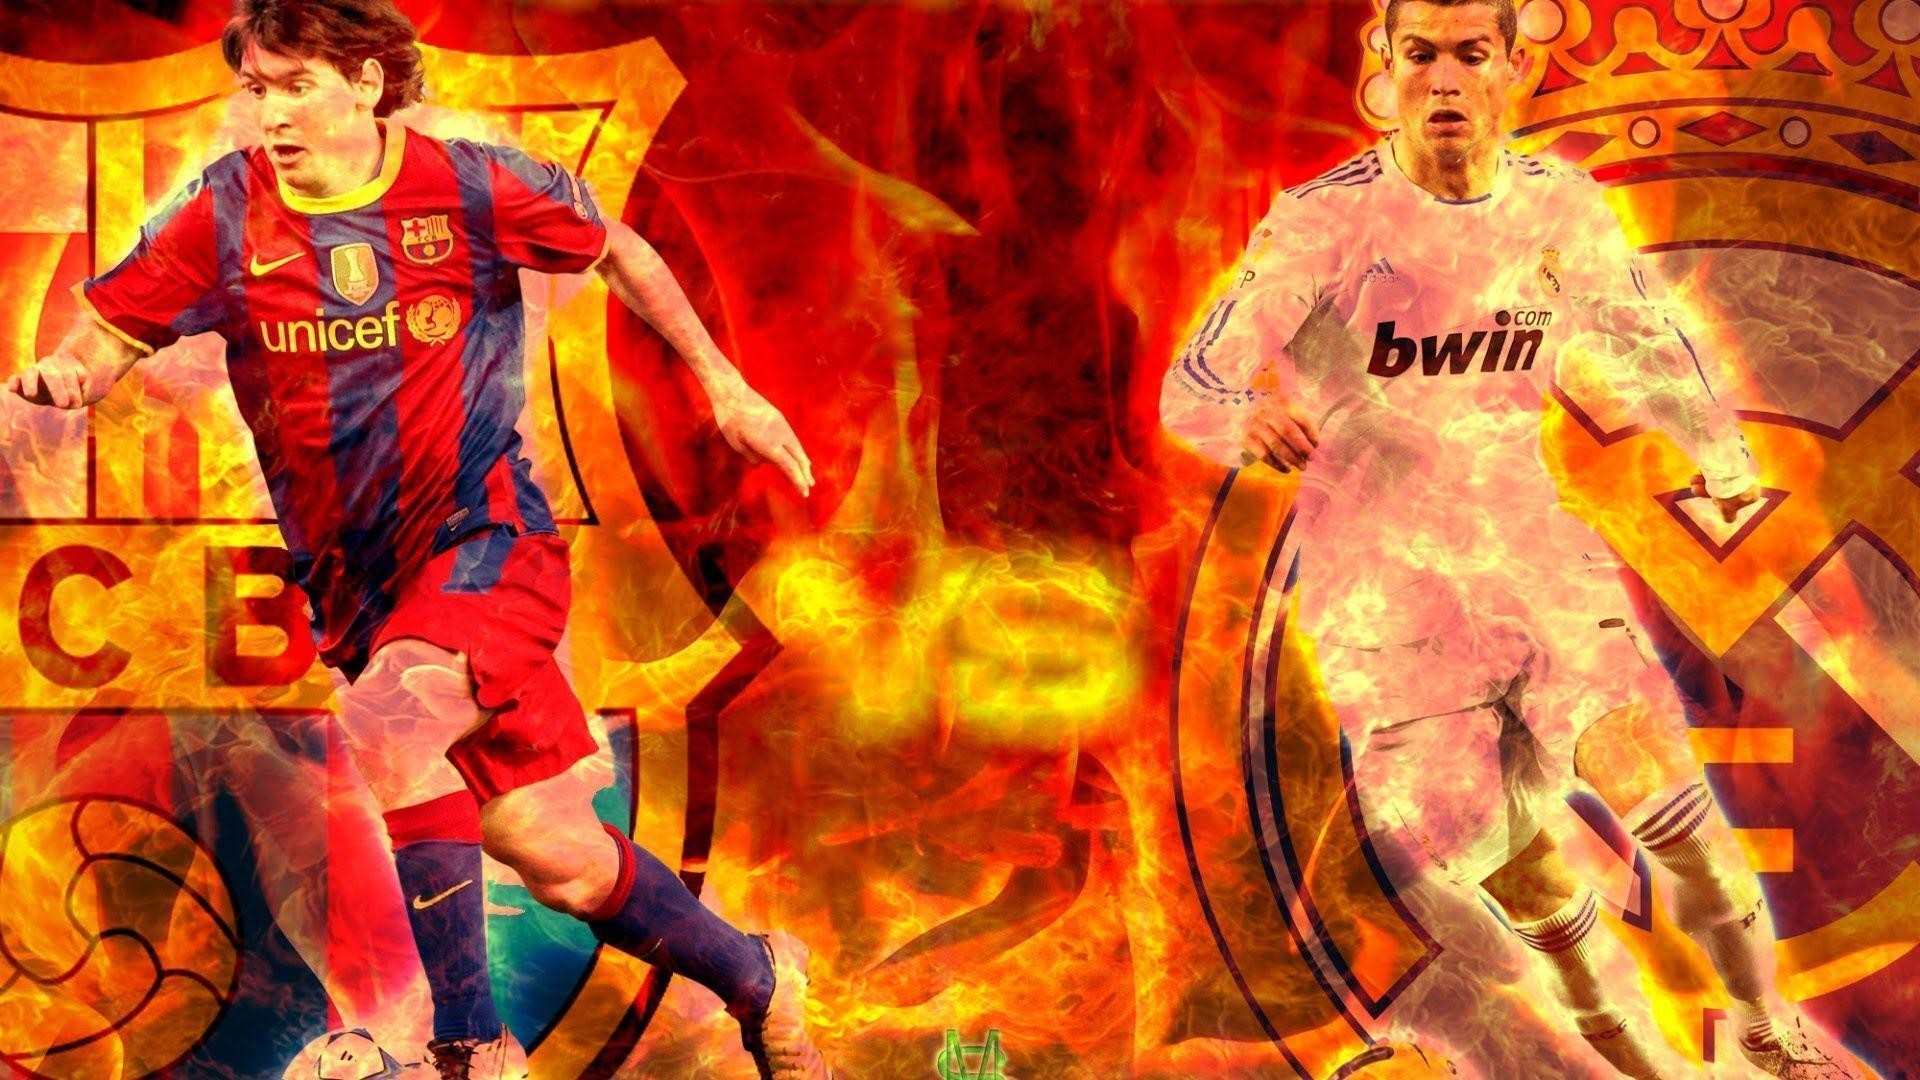 1920x1080 Cristiano Ronaldo vs Leo Messi | 2014-2015 | - YouTube